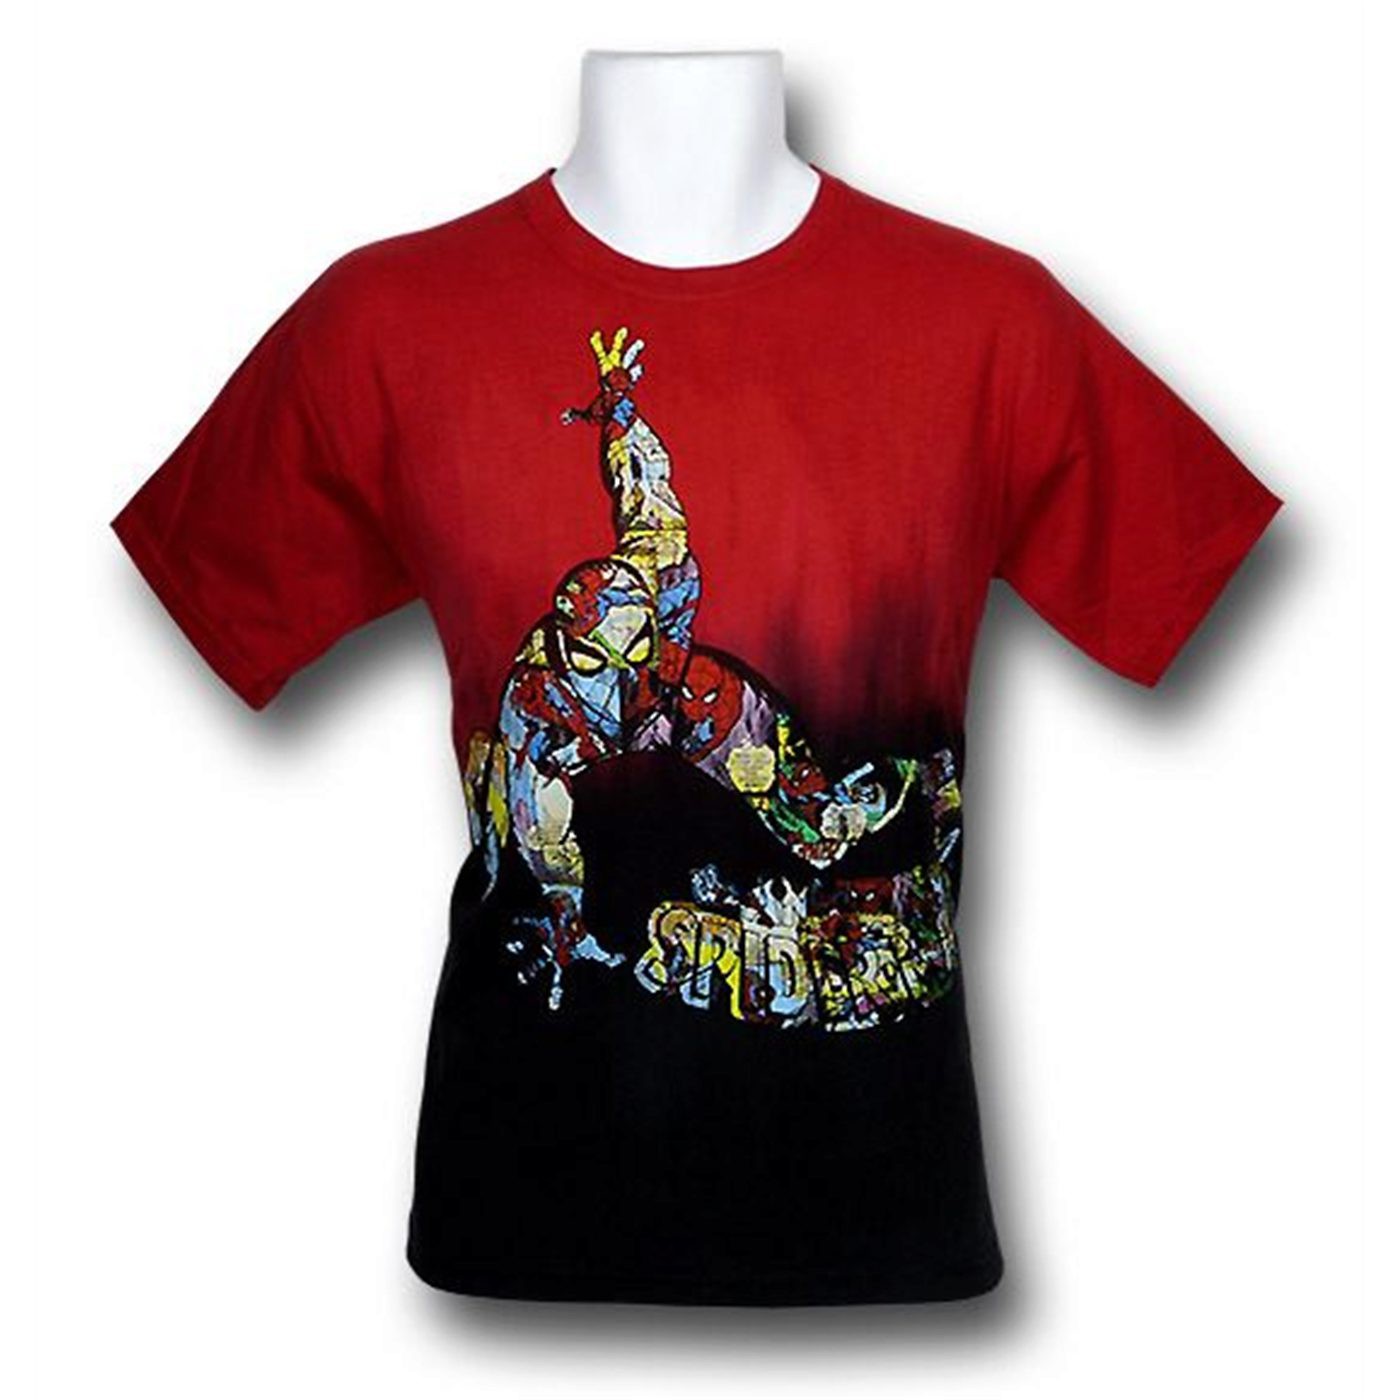 Spiderman Youth Red Black Chameleon T-Shirt